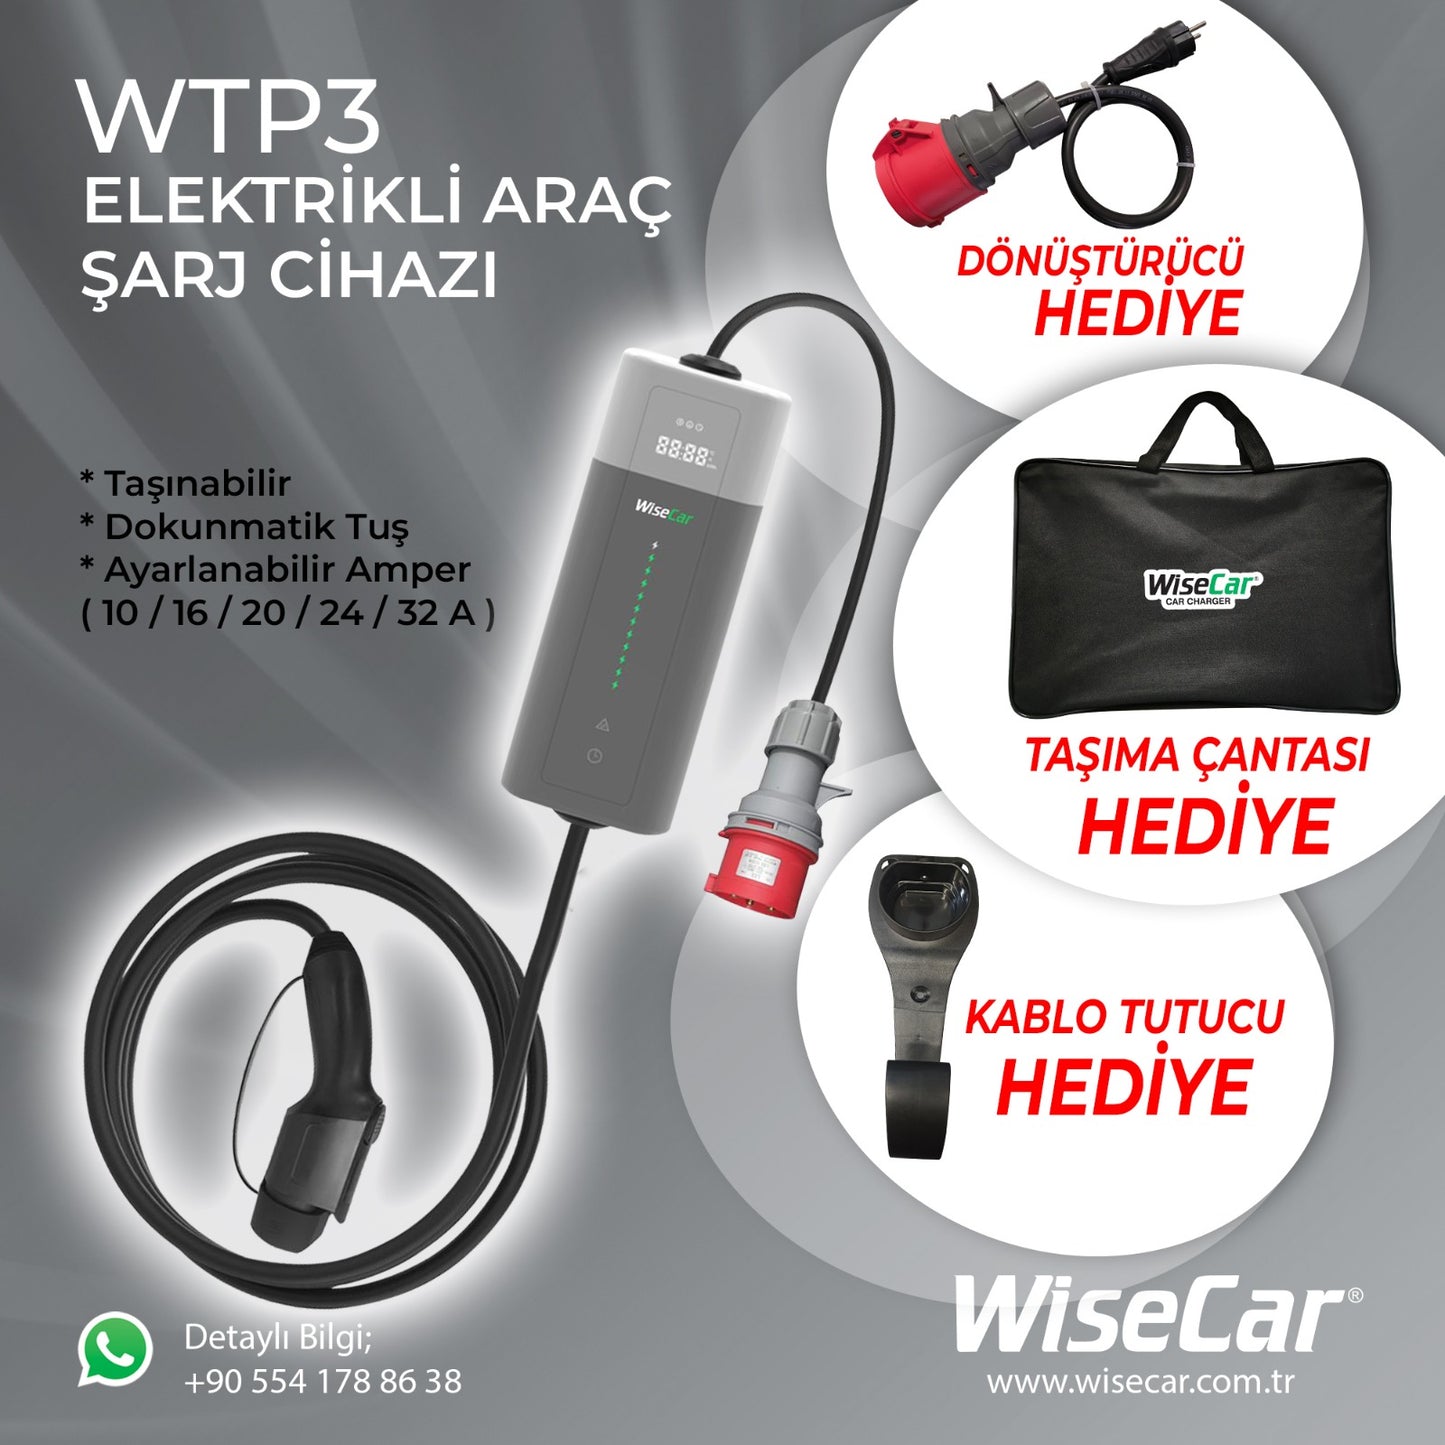 WiseCar WTP3 22 KW Taşınabilir Elektrikli Araç Şarj Cihazı